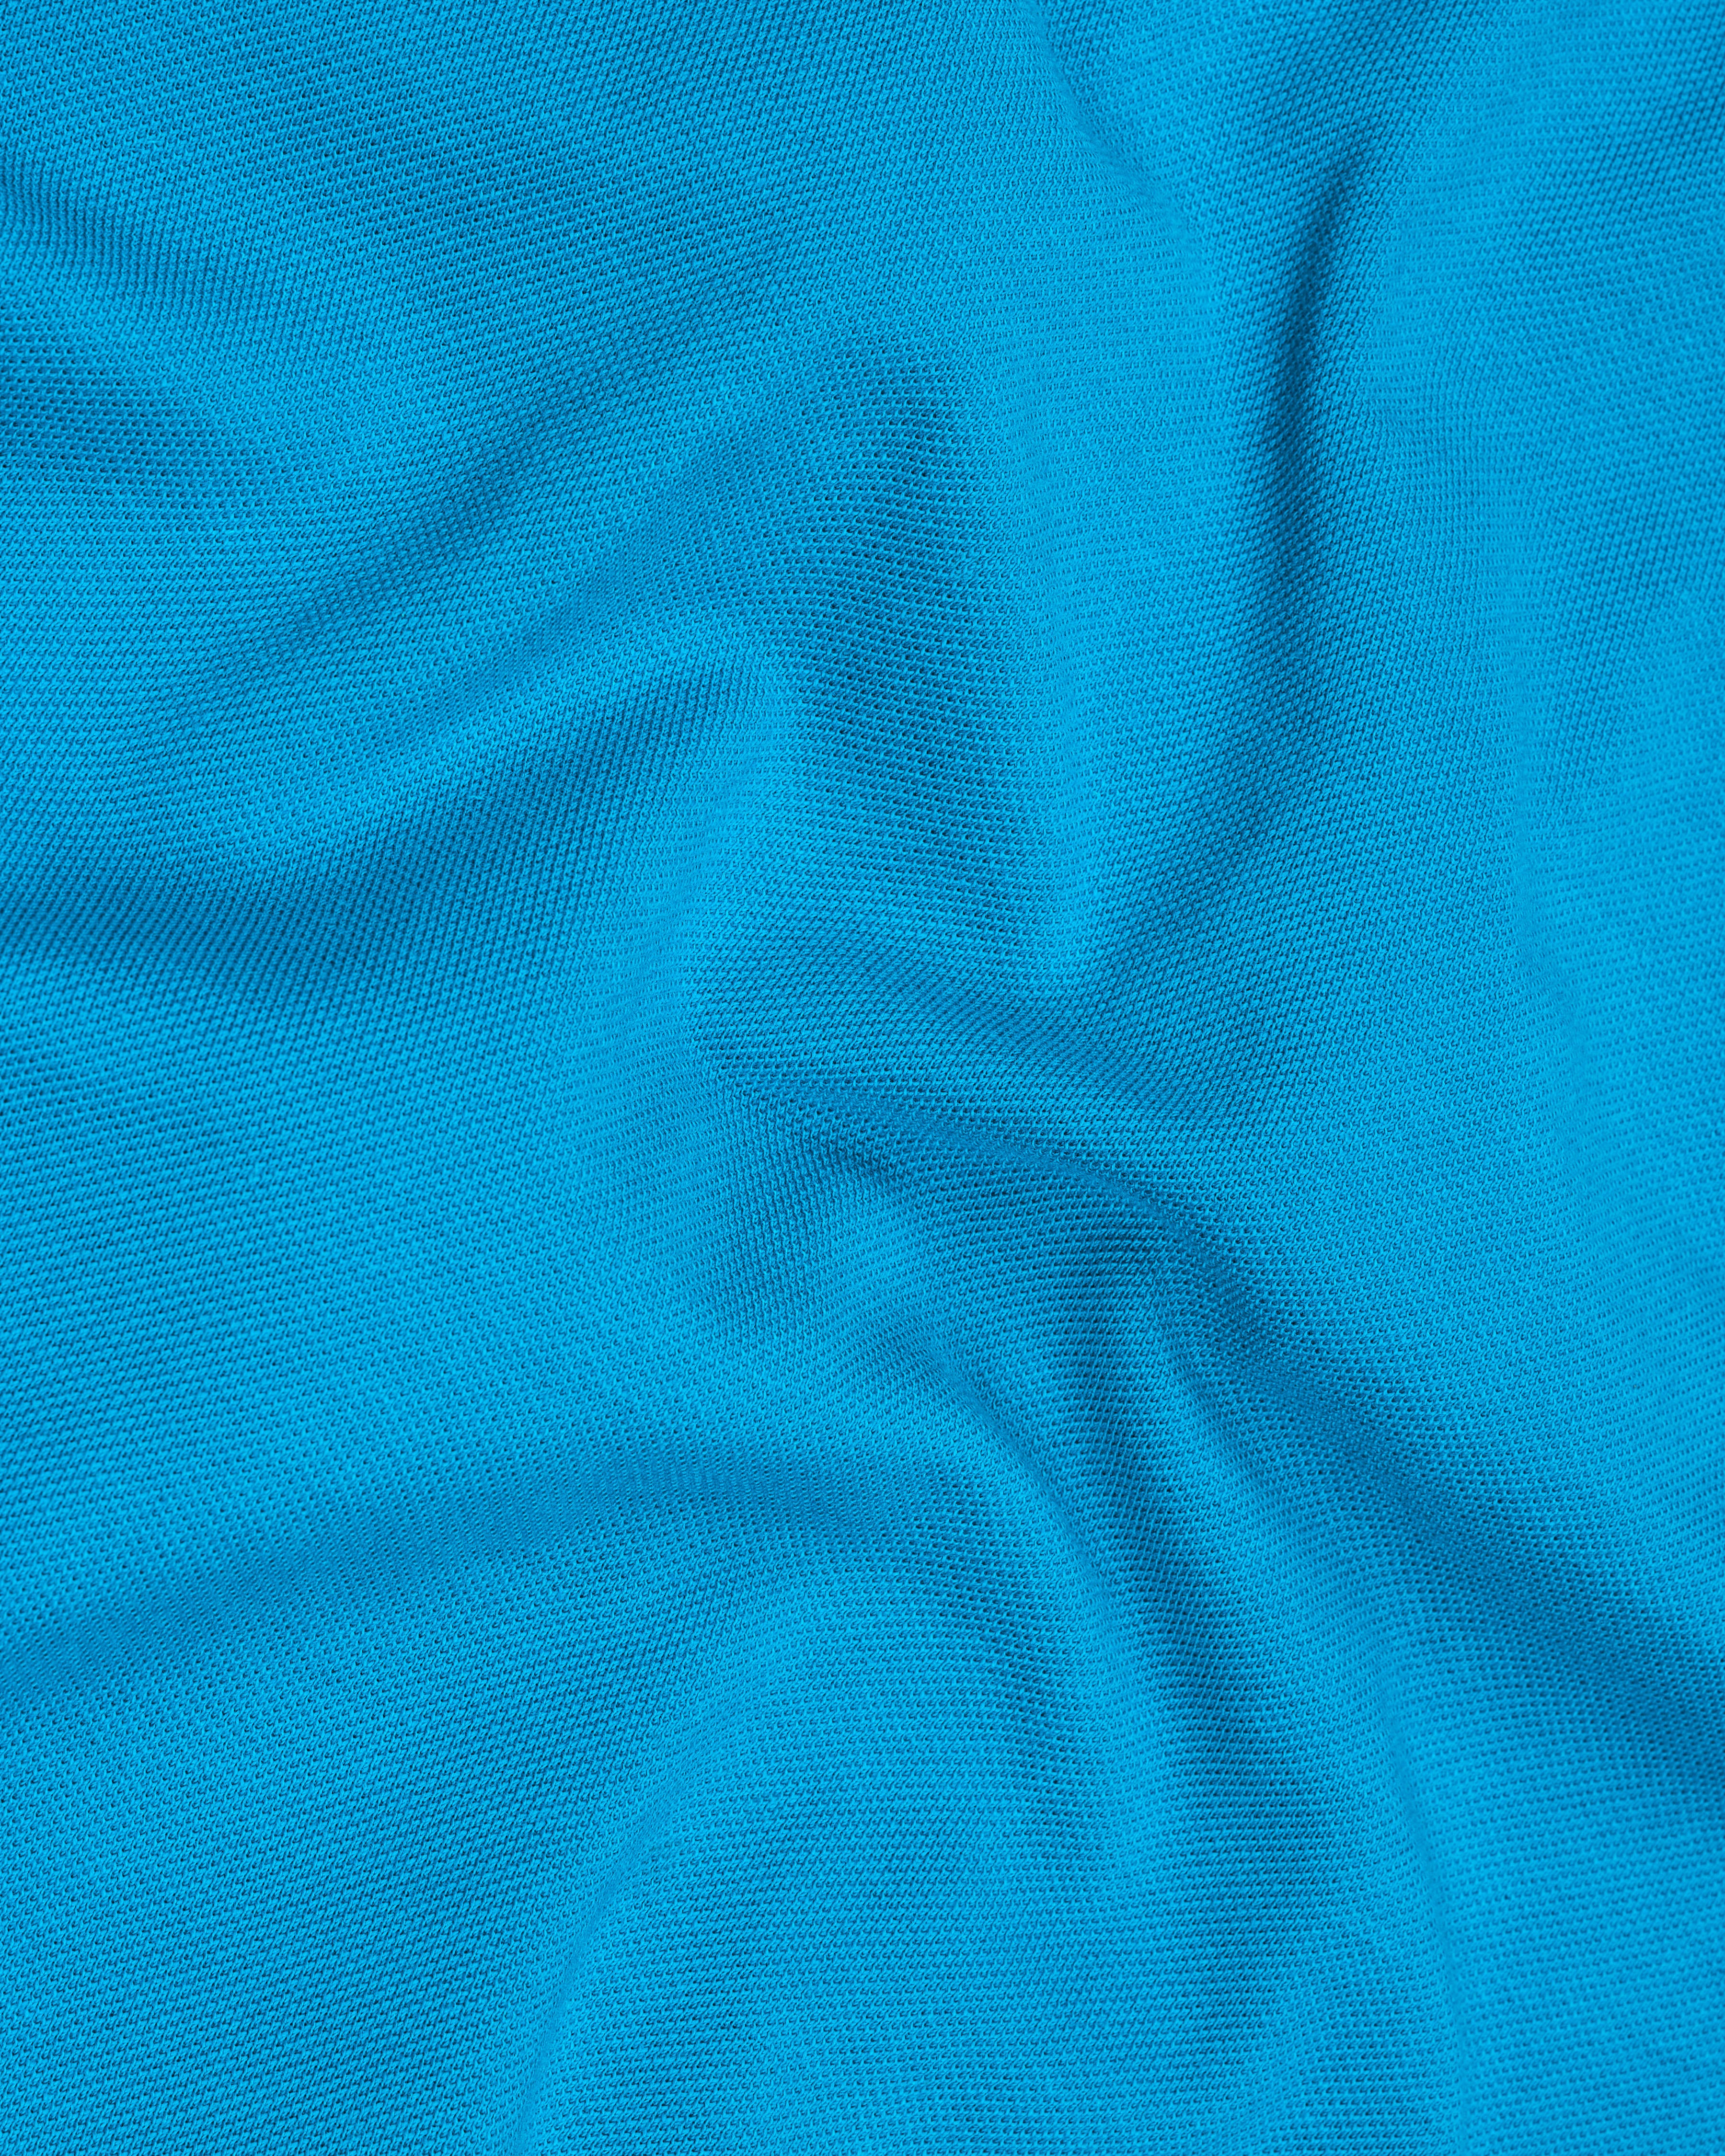 Bondi Blue Organic Cotton Pique Polo TS775-S, TS775-M, TS775-L, TS775-XL, TS775-XXL